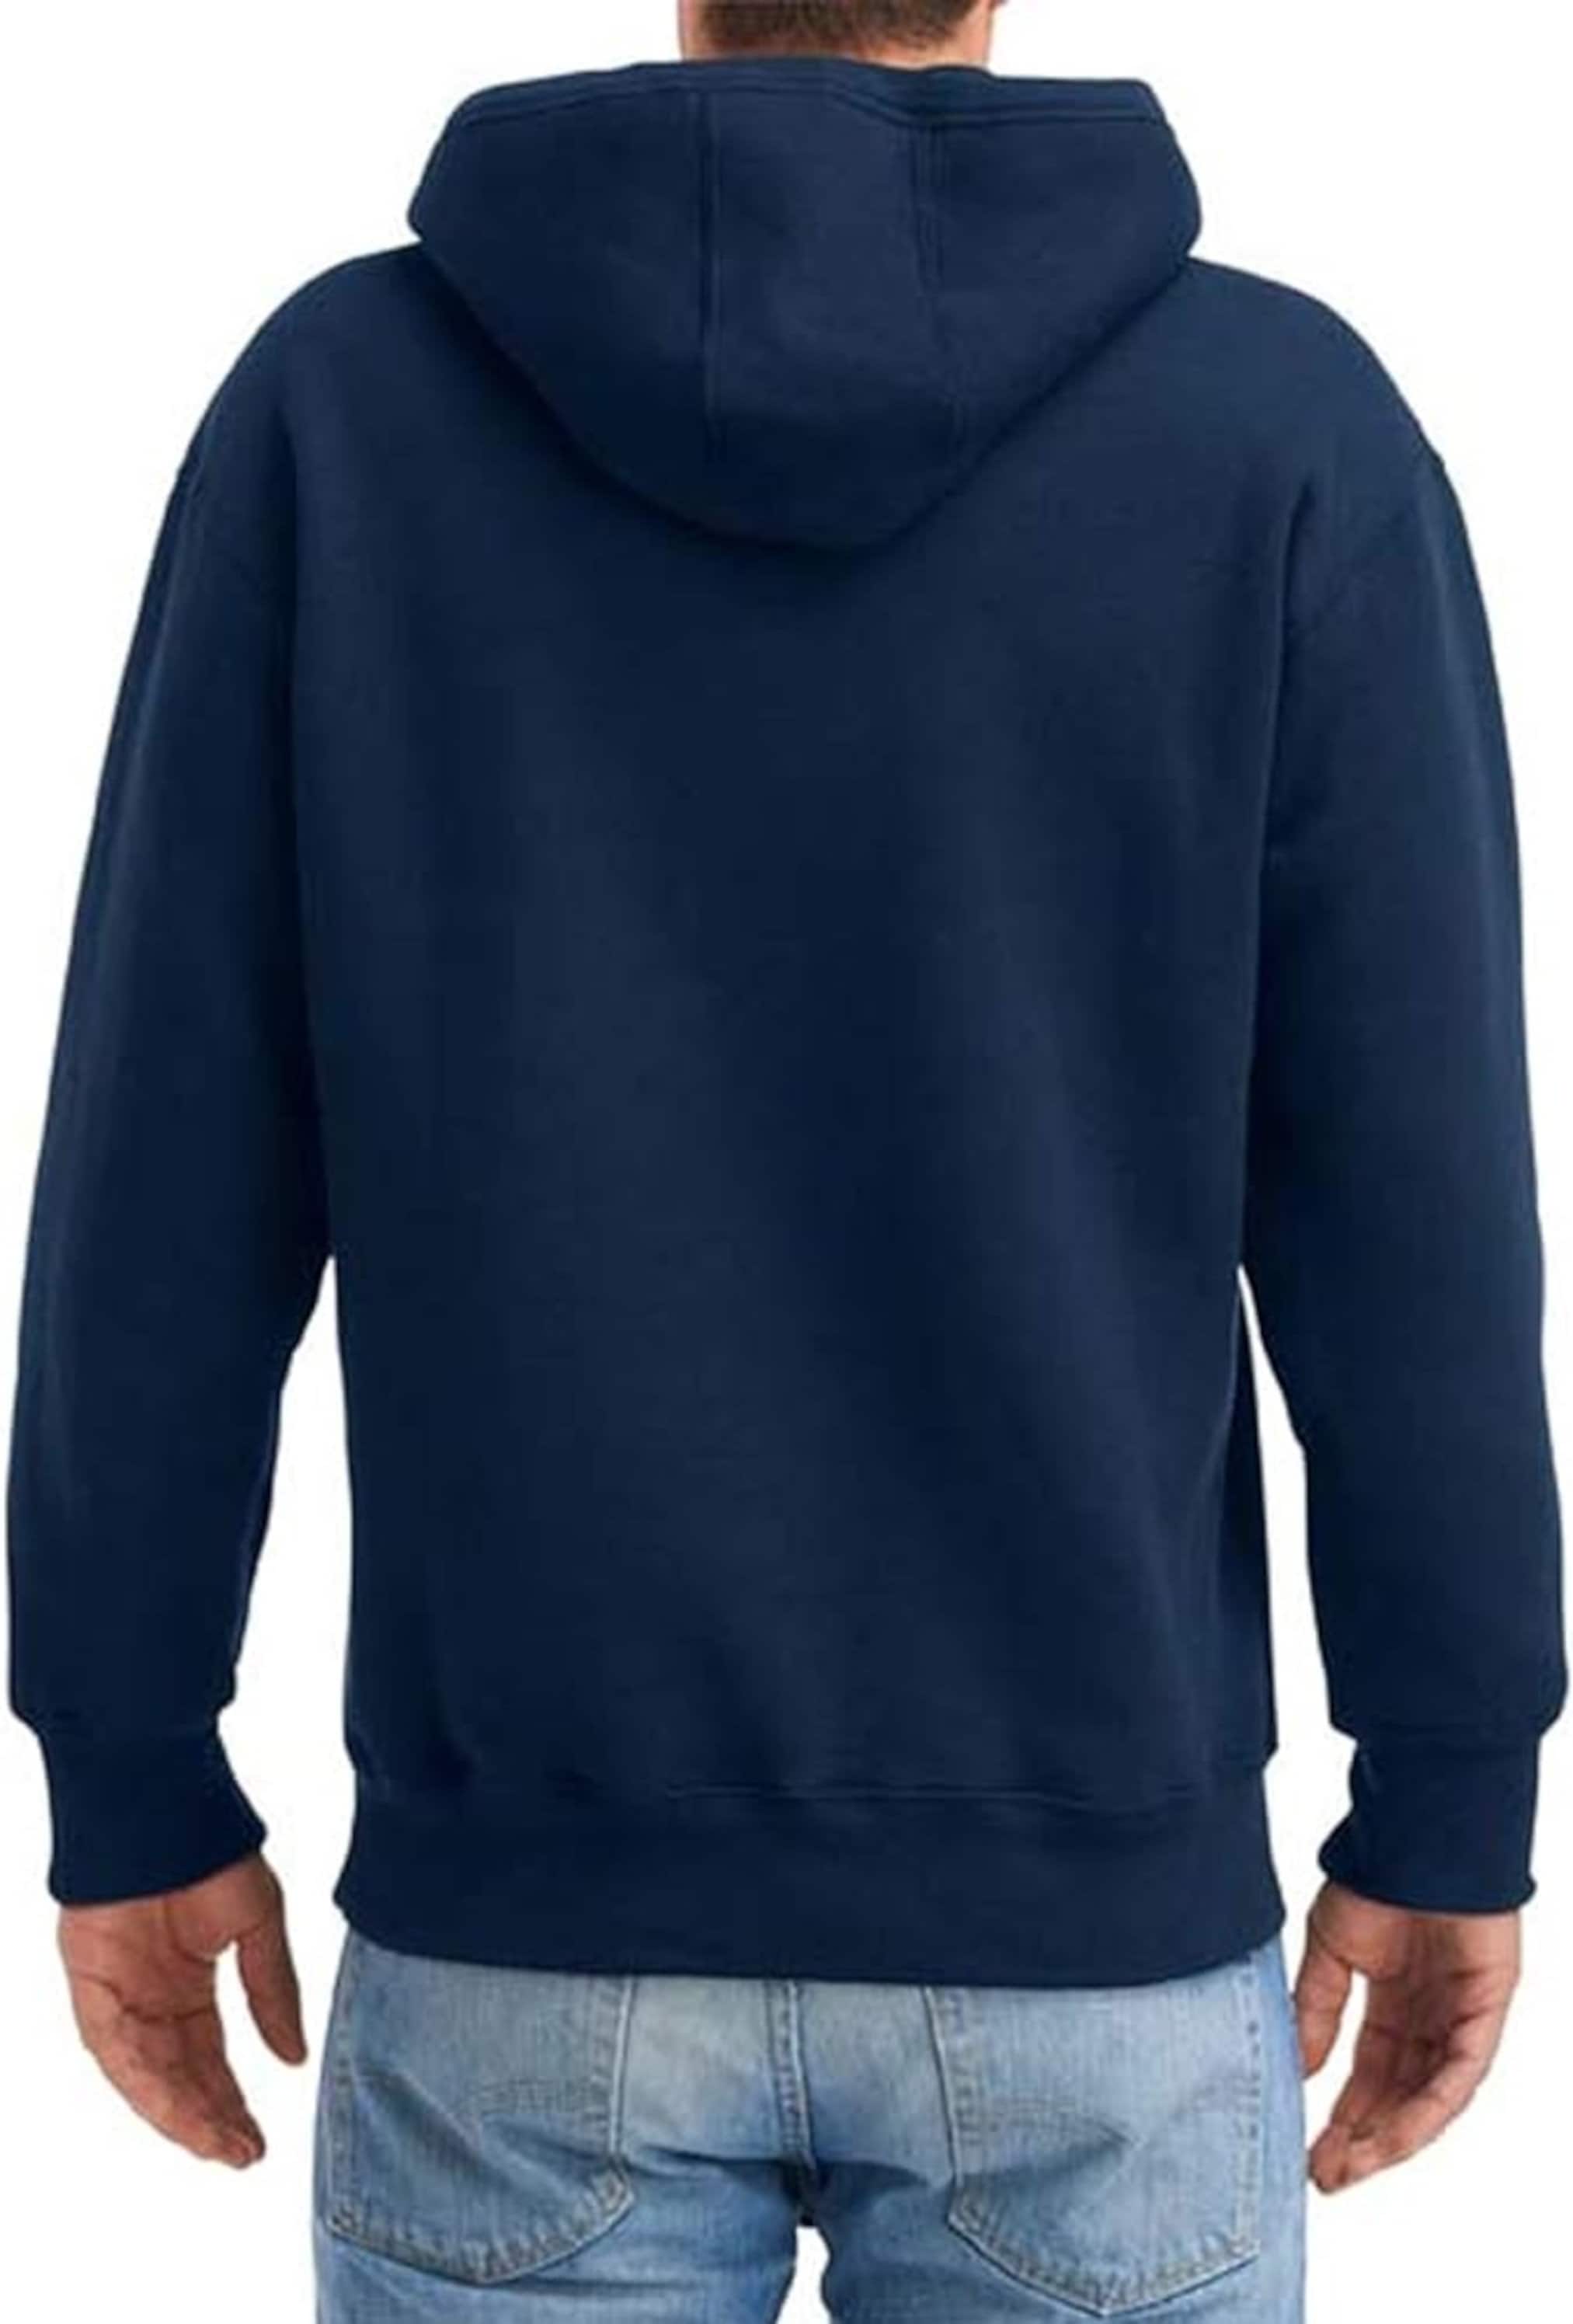 Gildan Navy Blue Hoodie 80/20 Cotton Polyester Blend Heavy Unisex Warm  Winter Pullover -  Canada